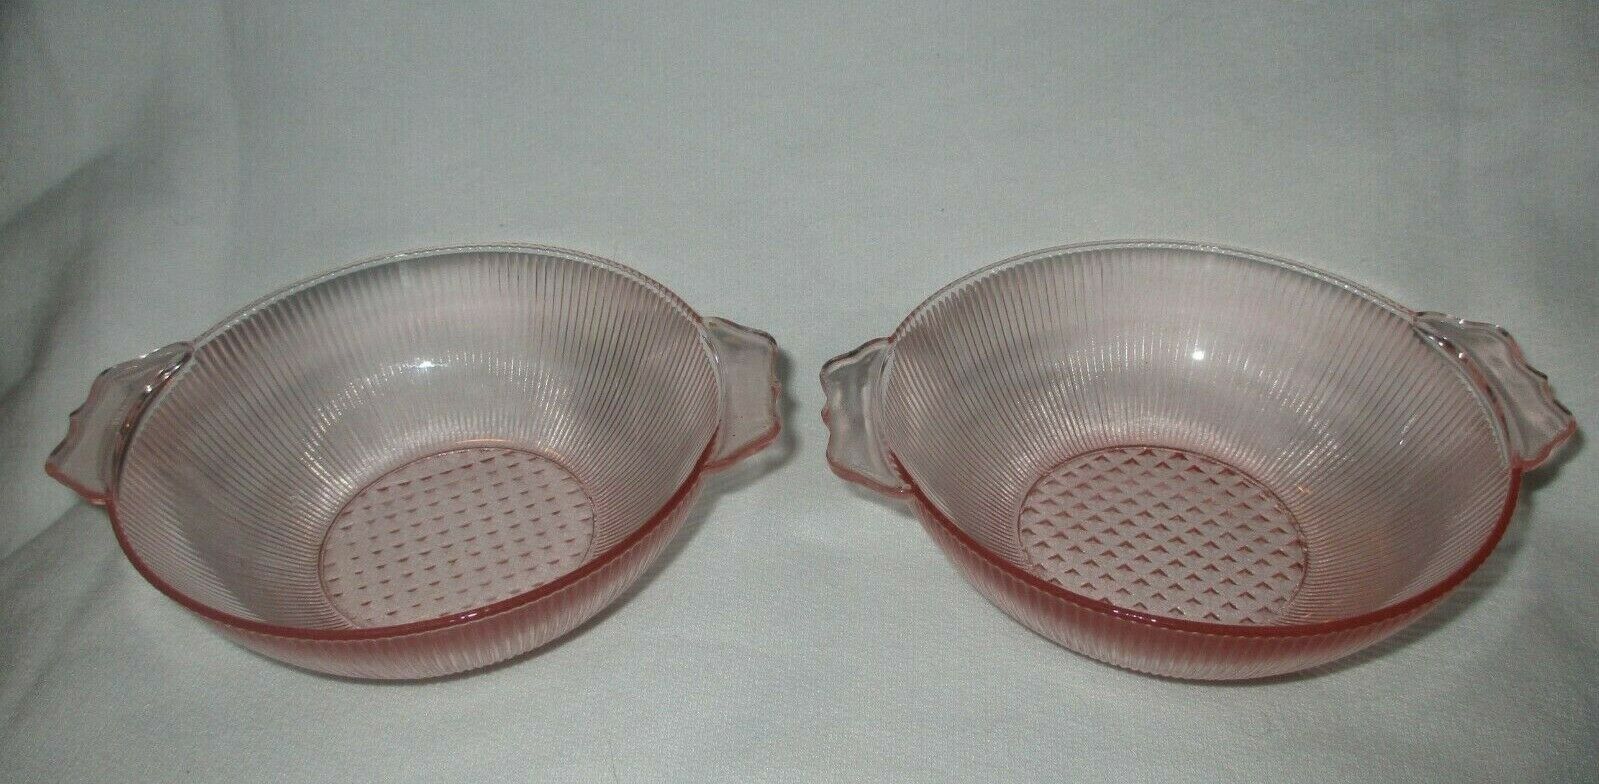 2 Homespun Berry Bowls  Pink Depression Glass